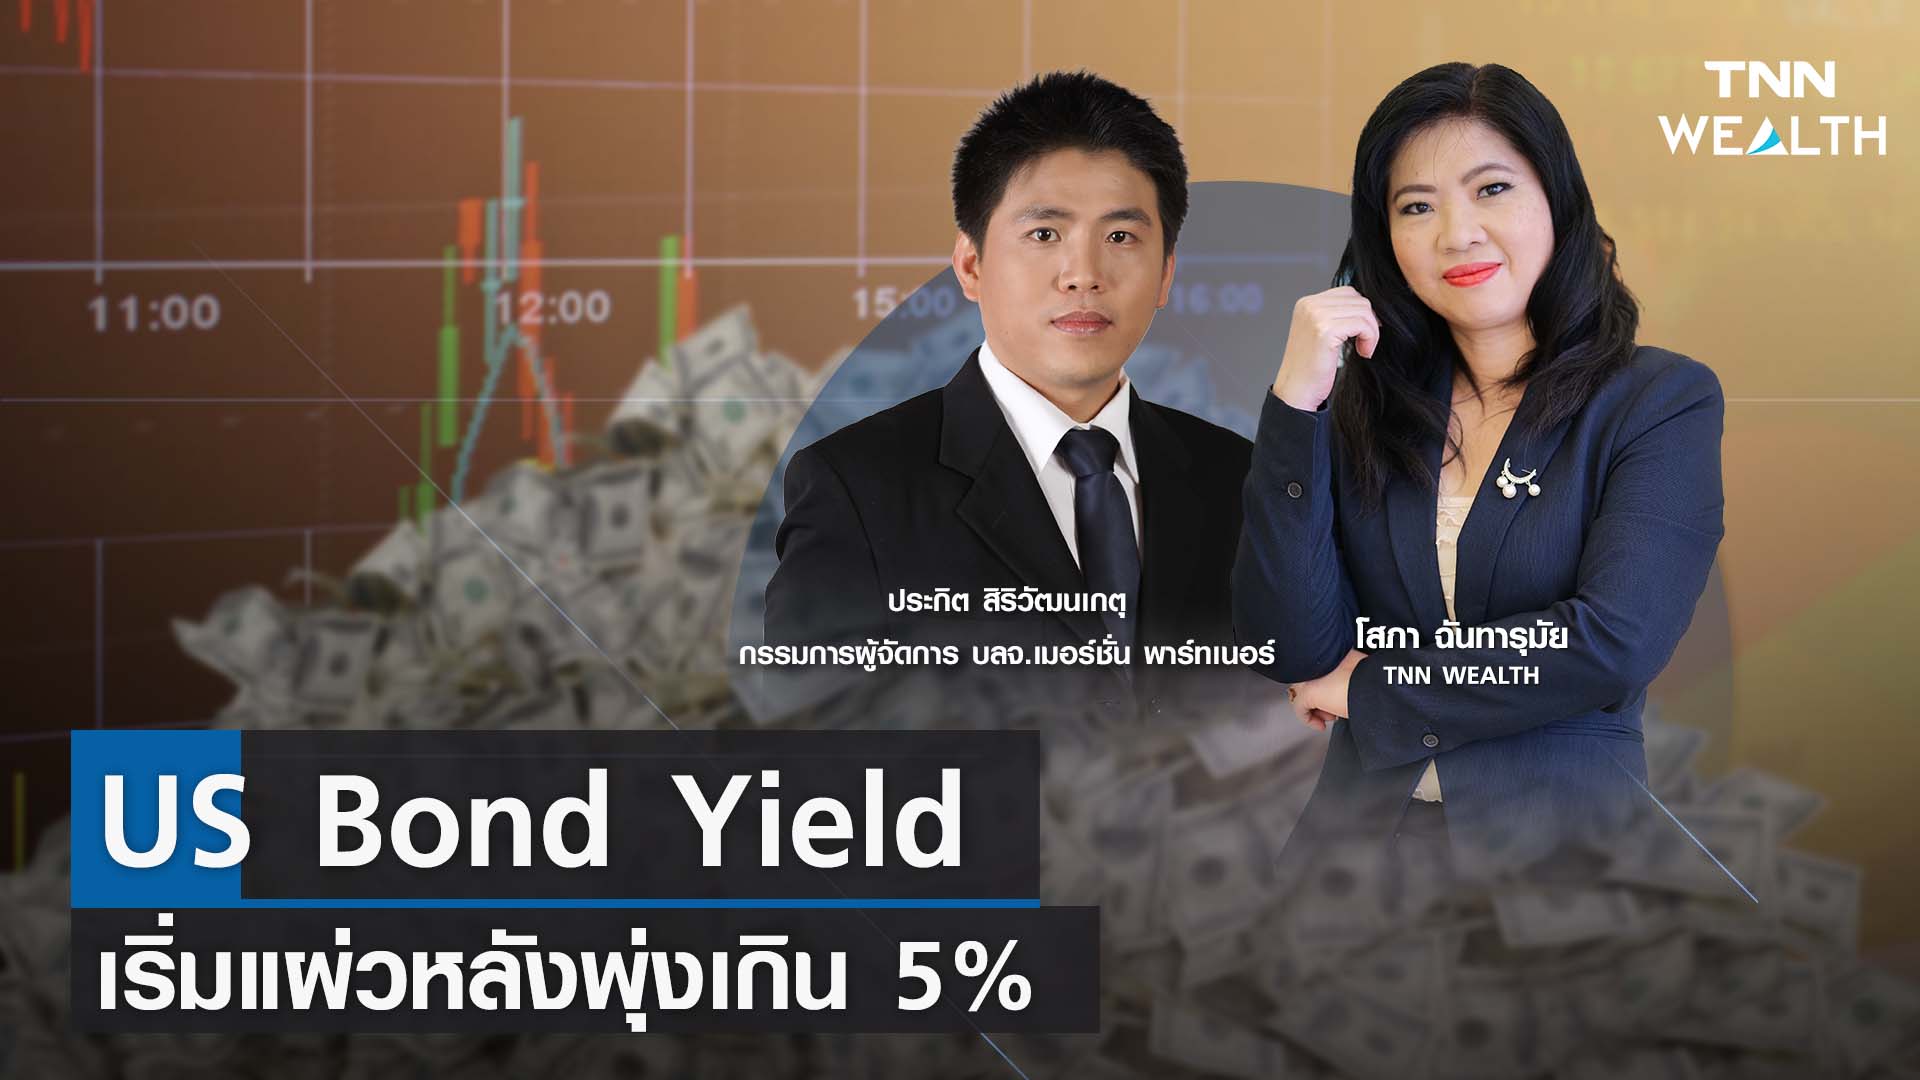 US Bond Yield เริ่มแผ่วหลังพุ่งเกิน 5% กับคุณประกิต สิริวัฒนเกตุ I TNN WEALTH 24 ต.ค. 66